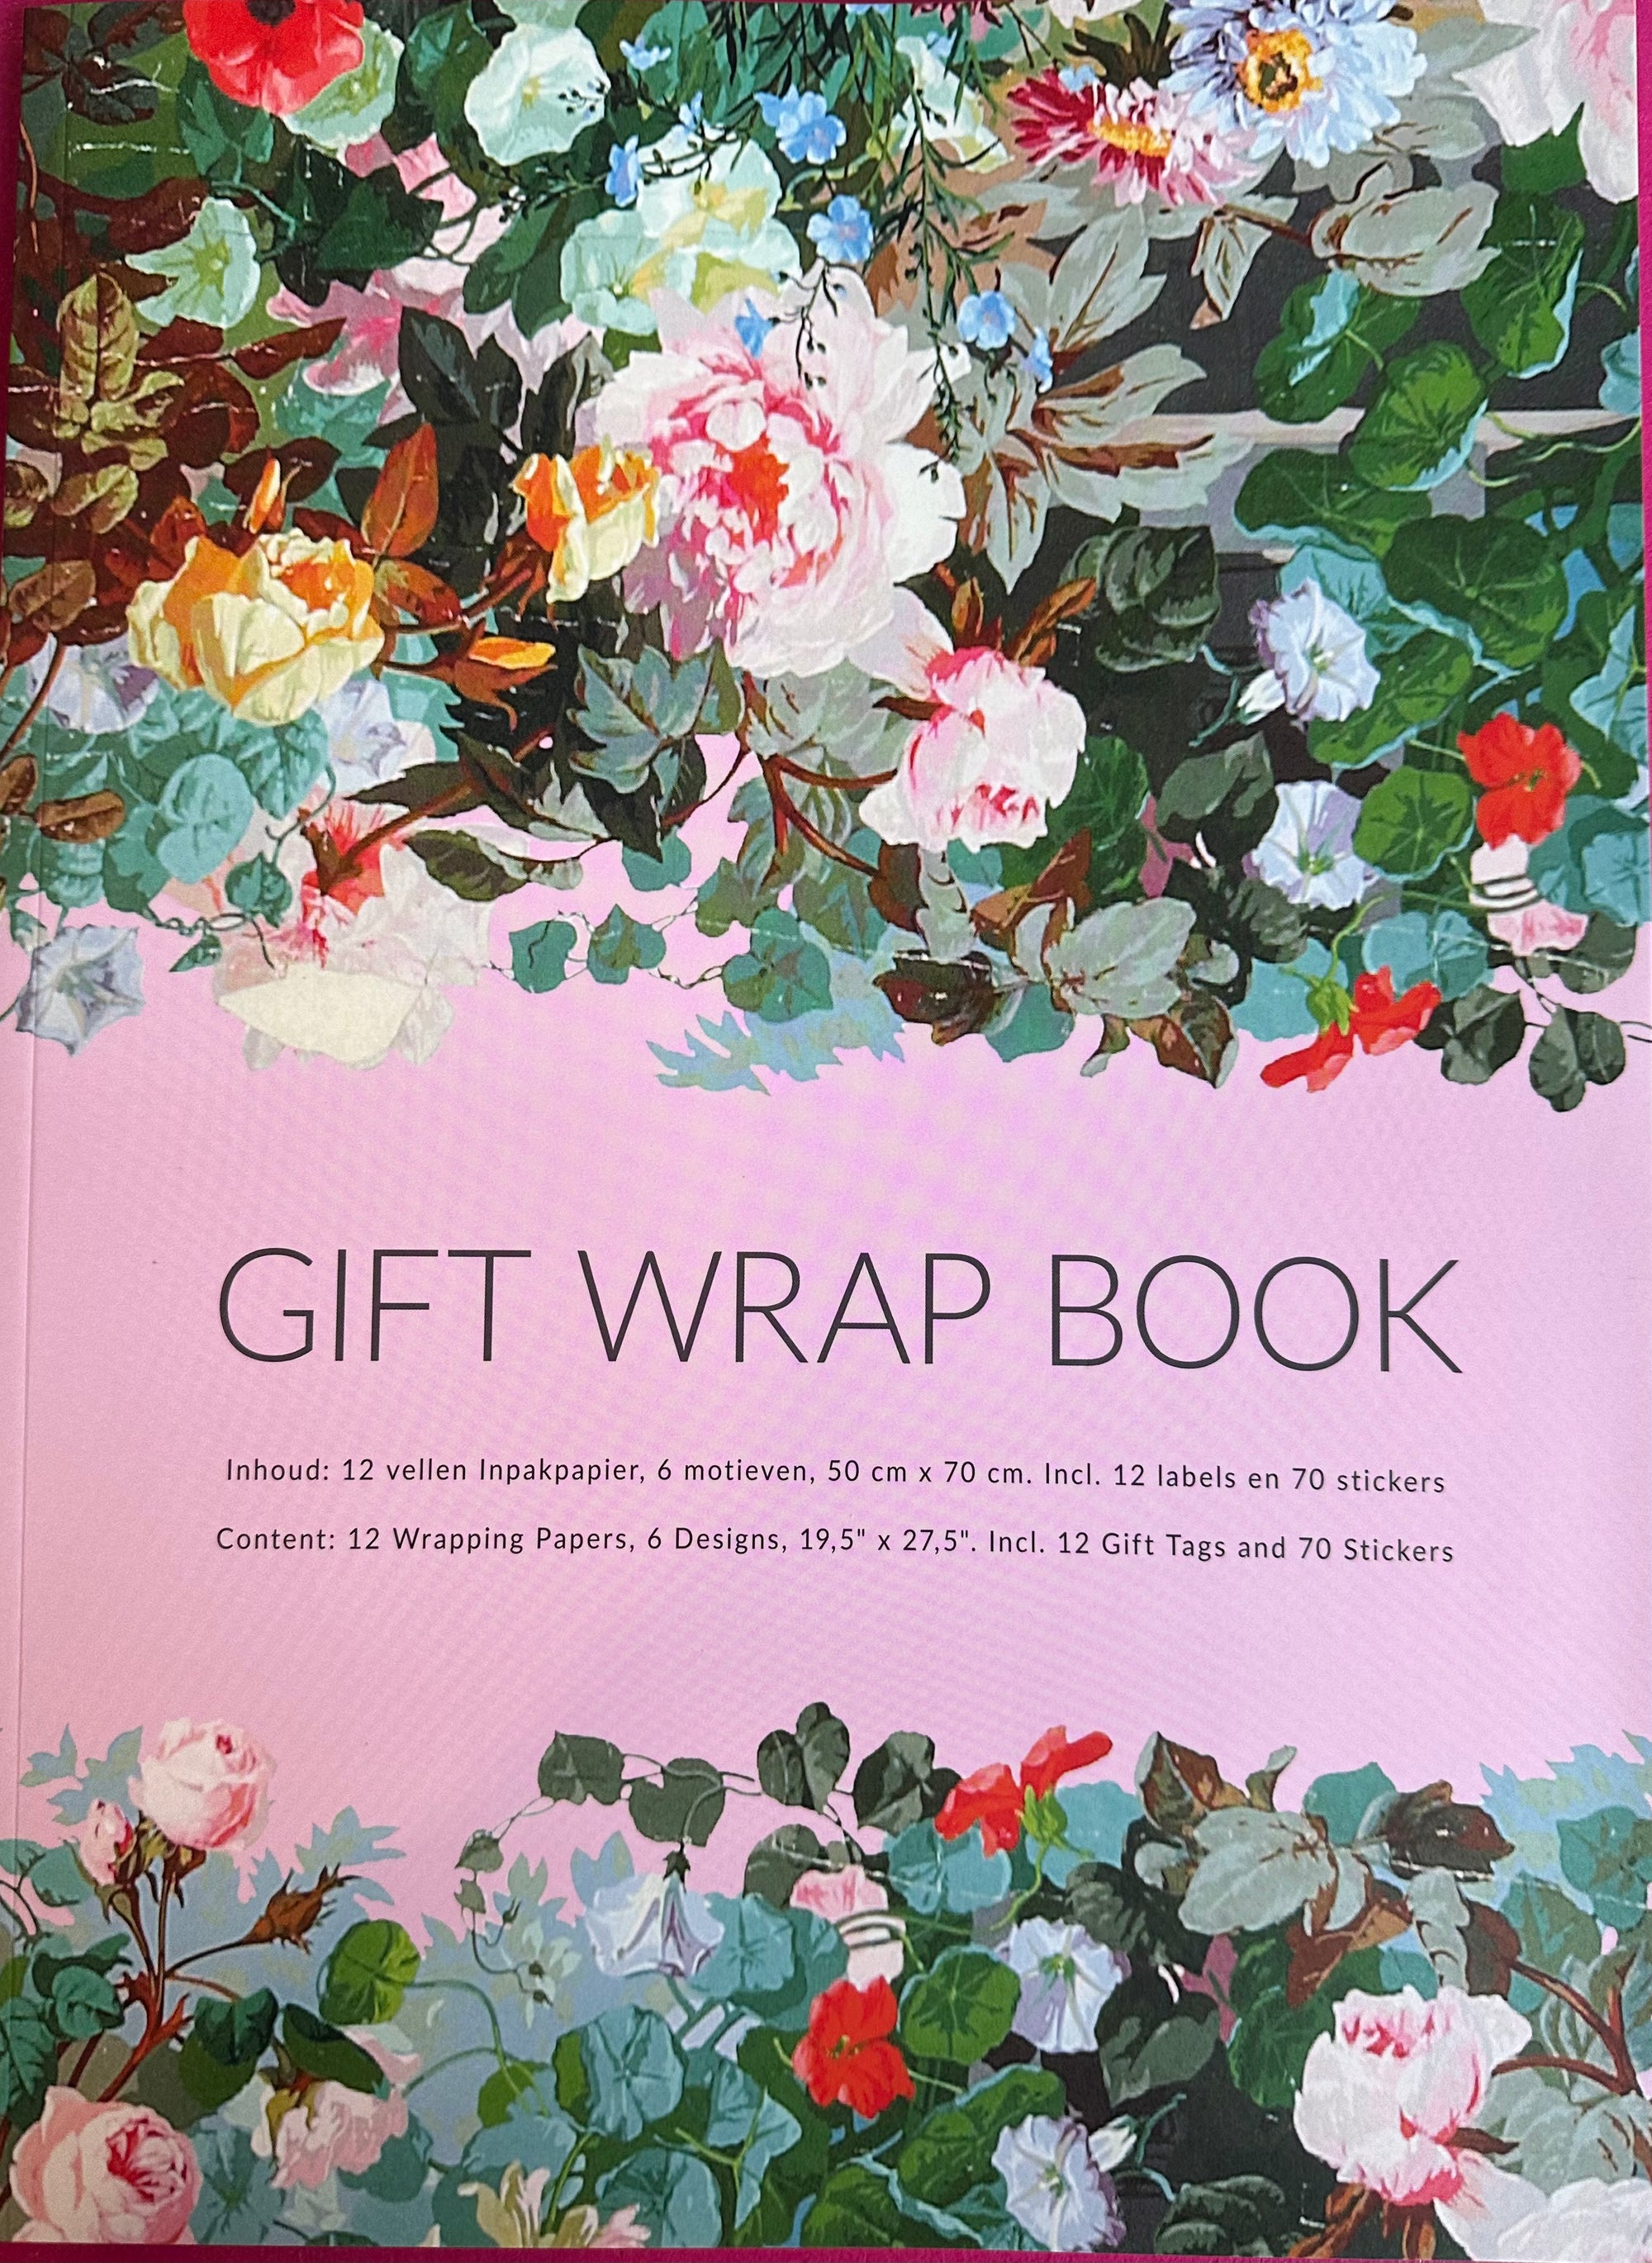 Gift Wrap book